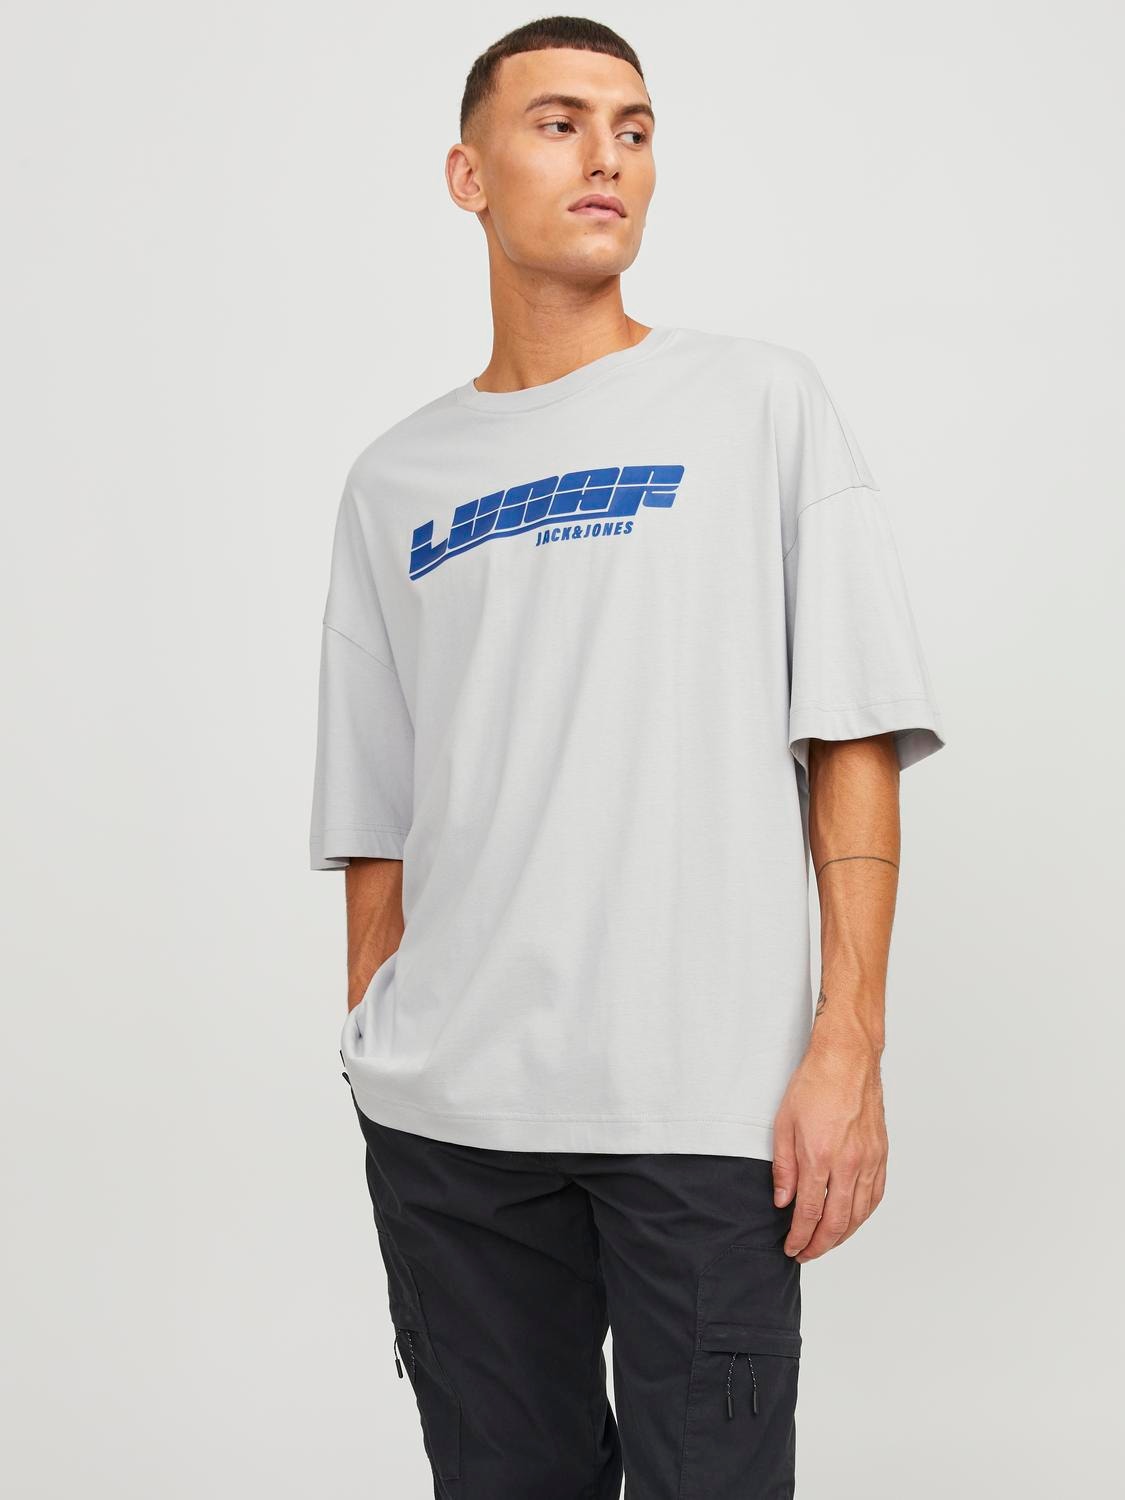 Jack & Jones Printed Crew neck T-shirt -High-rise - 12247086